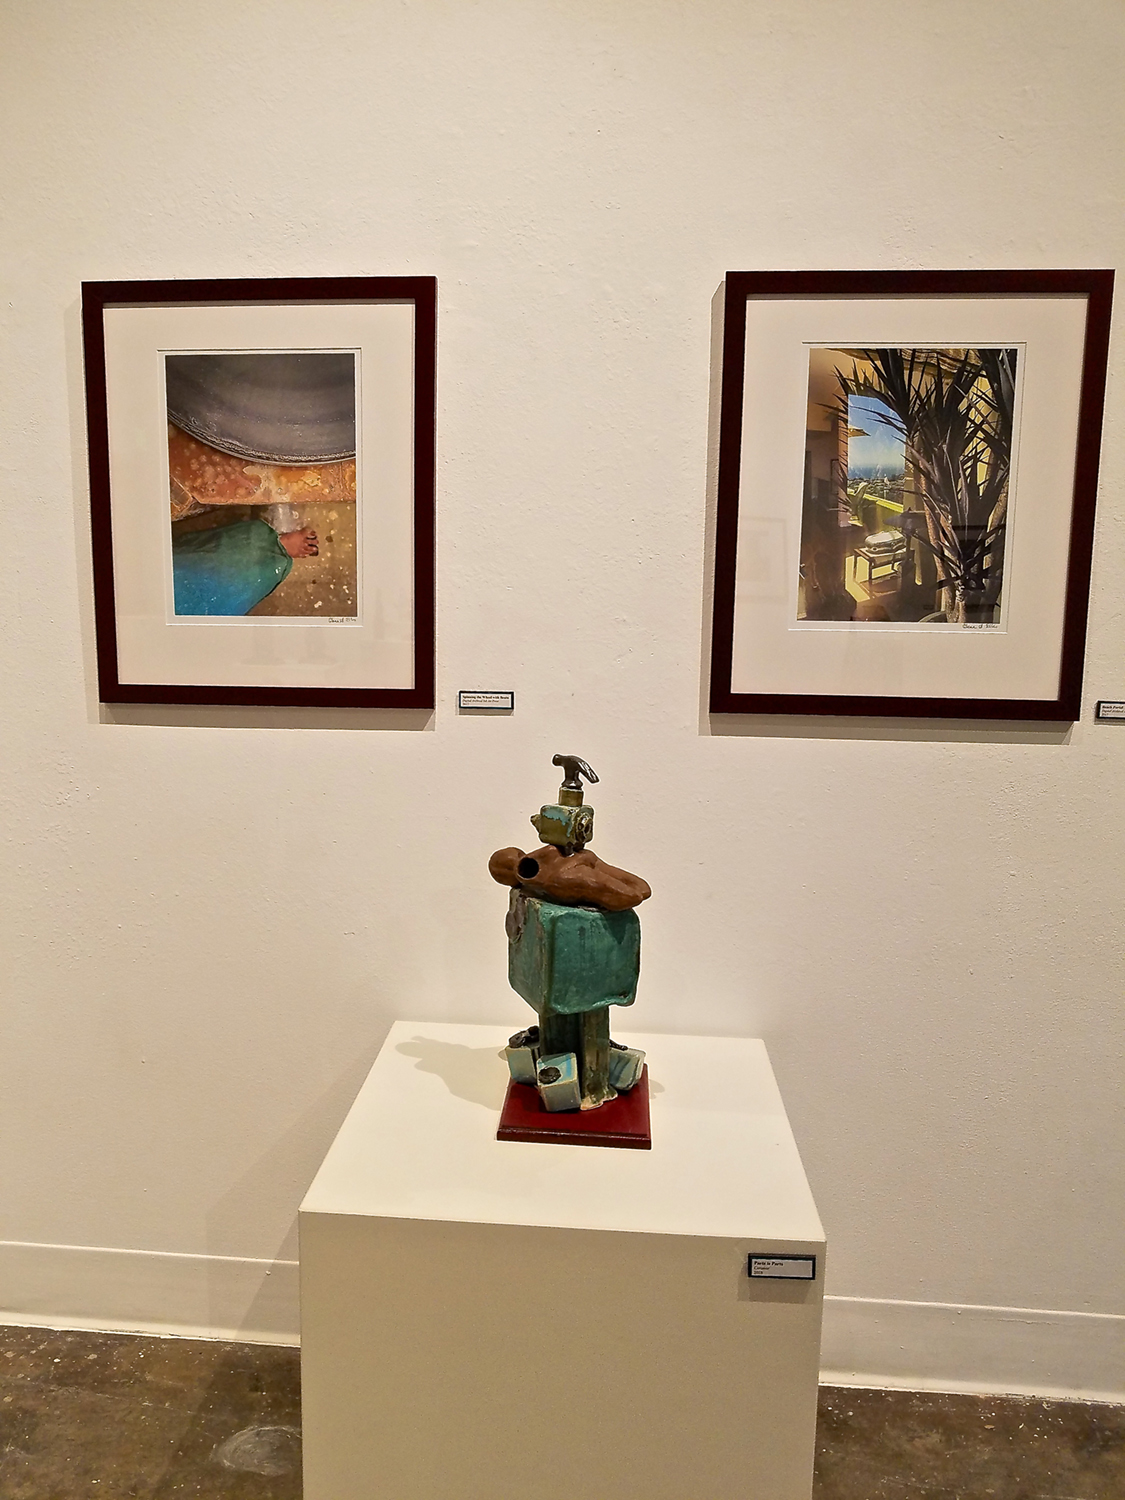 Ceramic figure on a pedestal between two paintings. Image courtesy of Olena Ellis